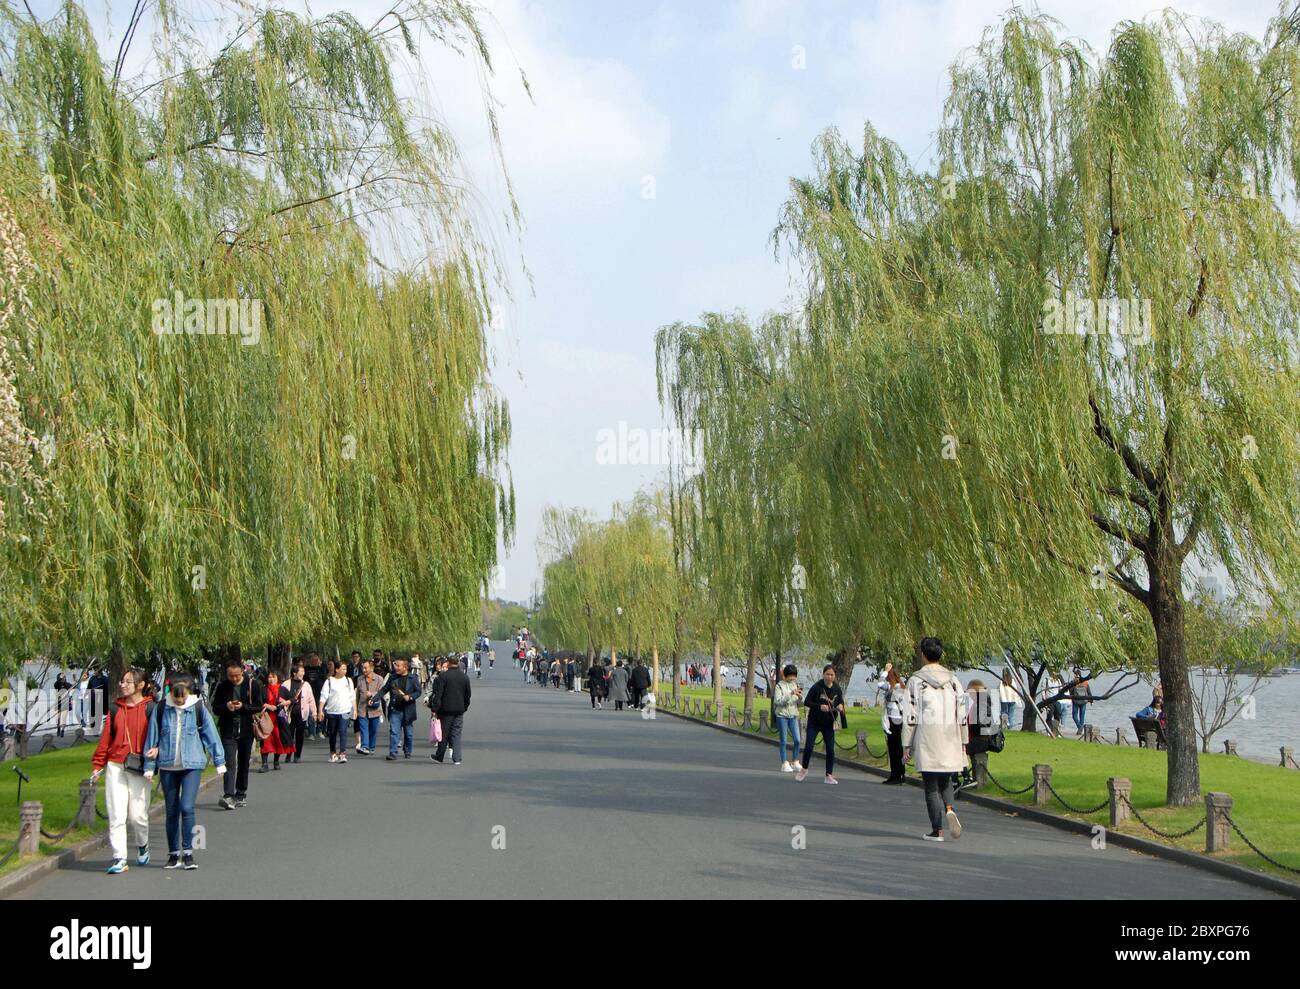 West Lake in Hangzhou, Zhejiang Province, China.  People walking on Baidi Causeway across West Lake beneath willow trees. Stock Photo